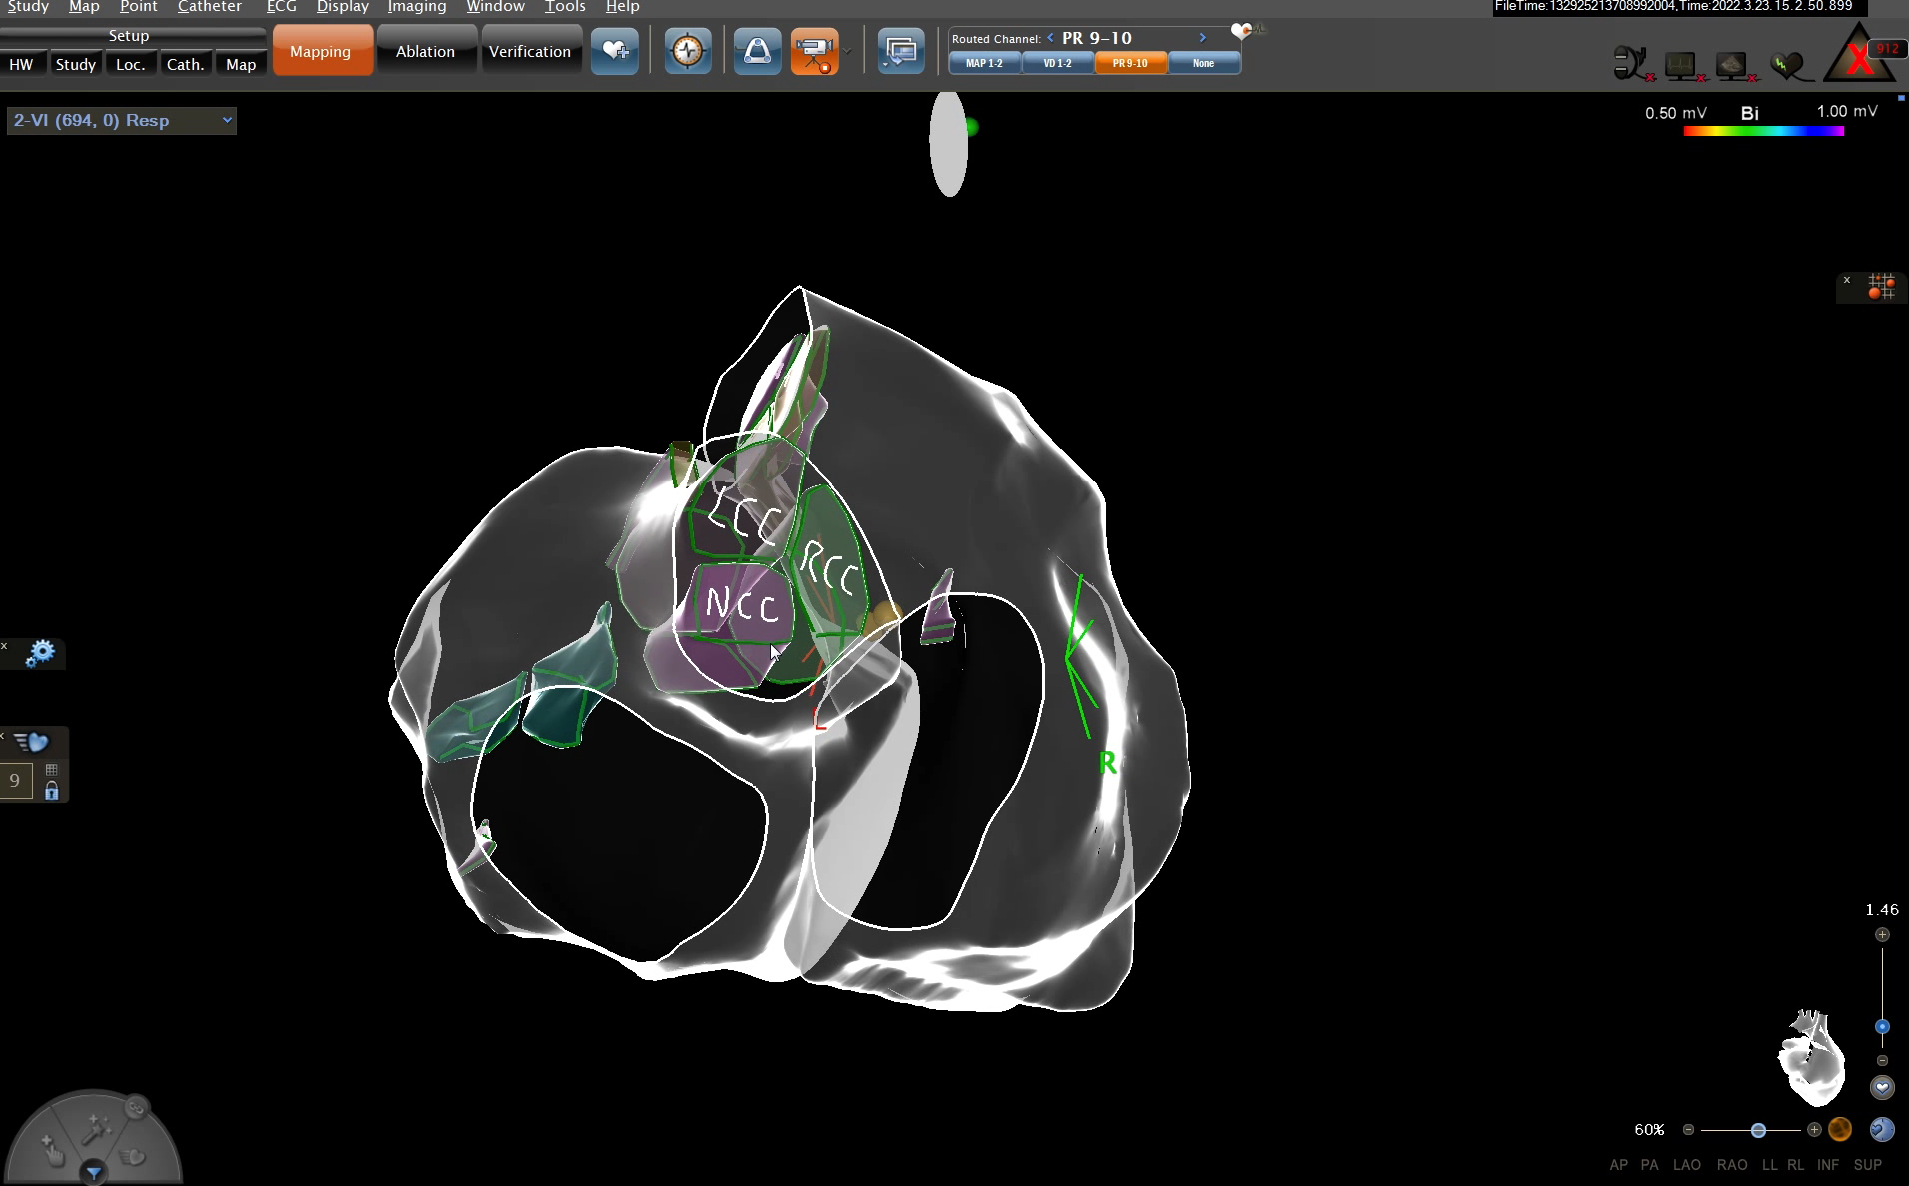 Left ventricular summit / 3D reconstruction 